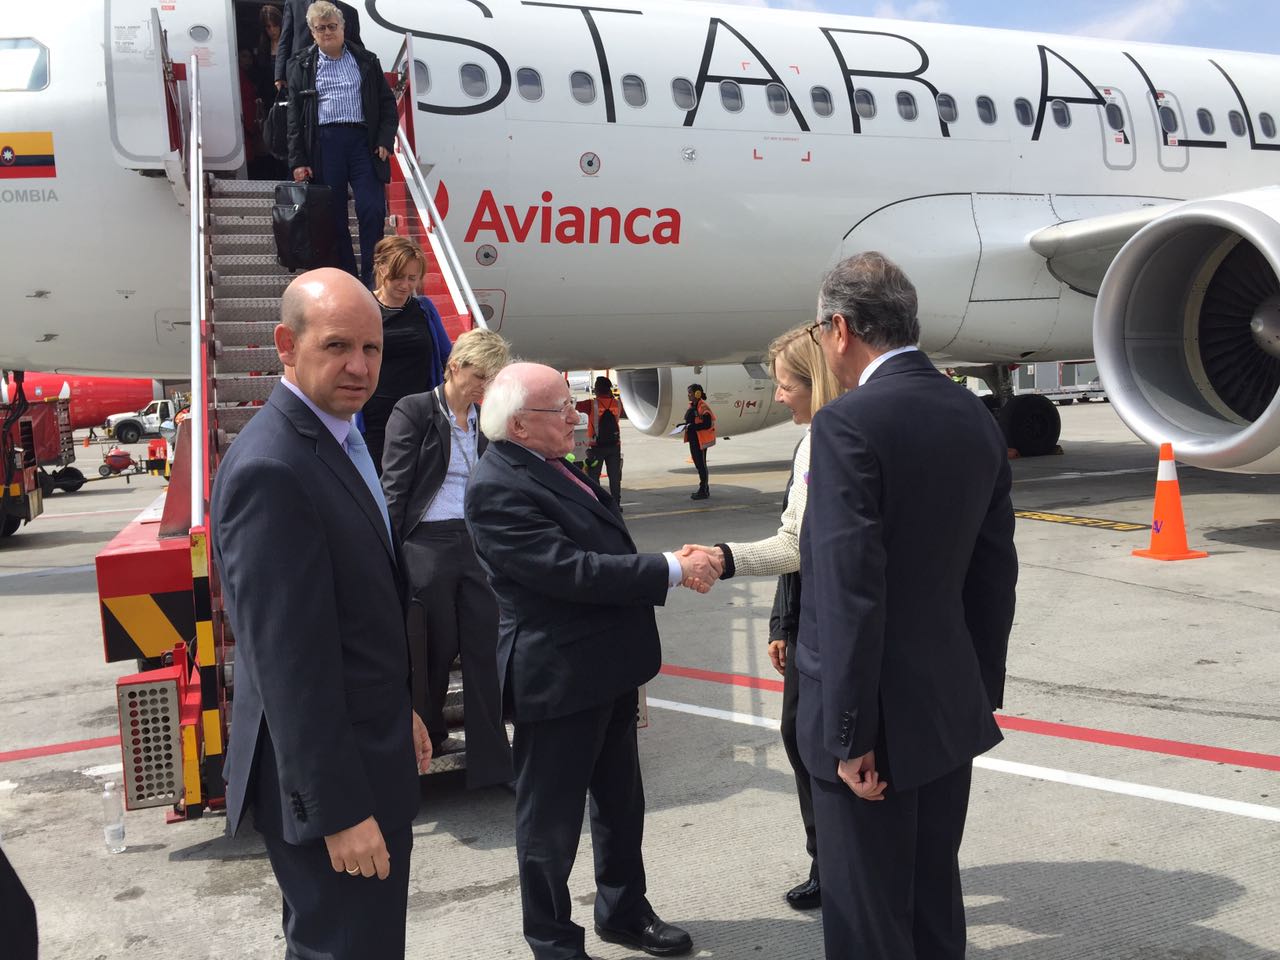 Irish President Michael D. Higgins arrives in Colombia.